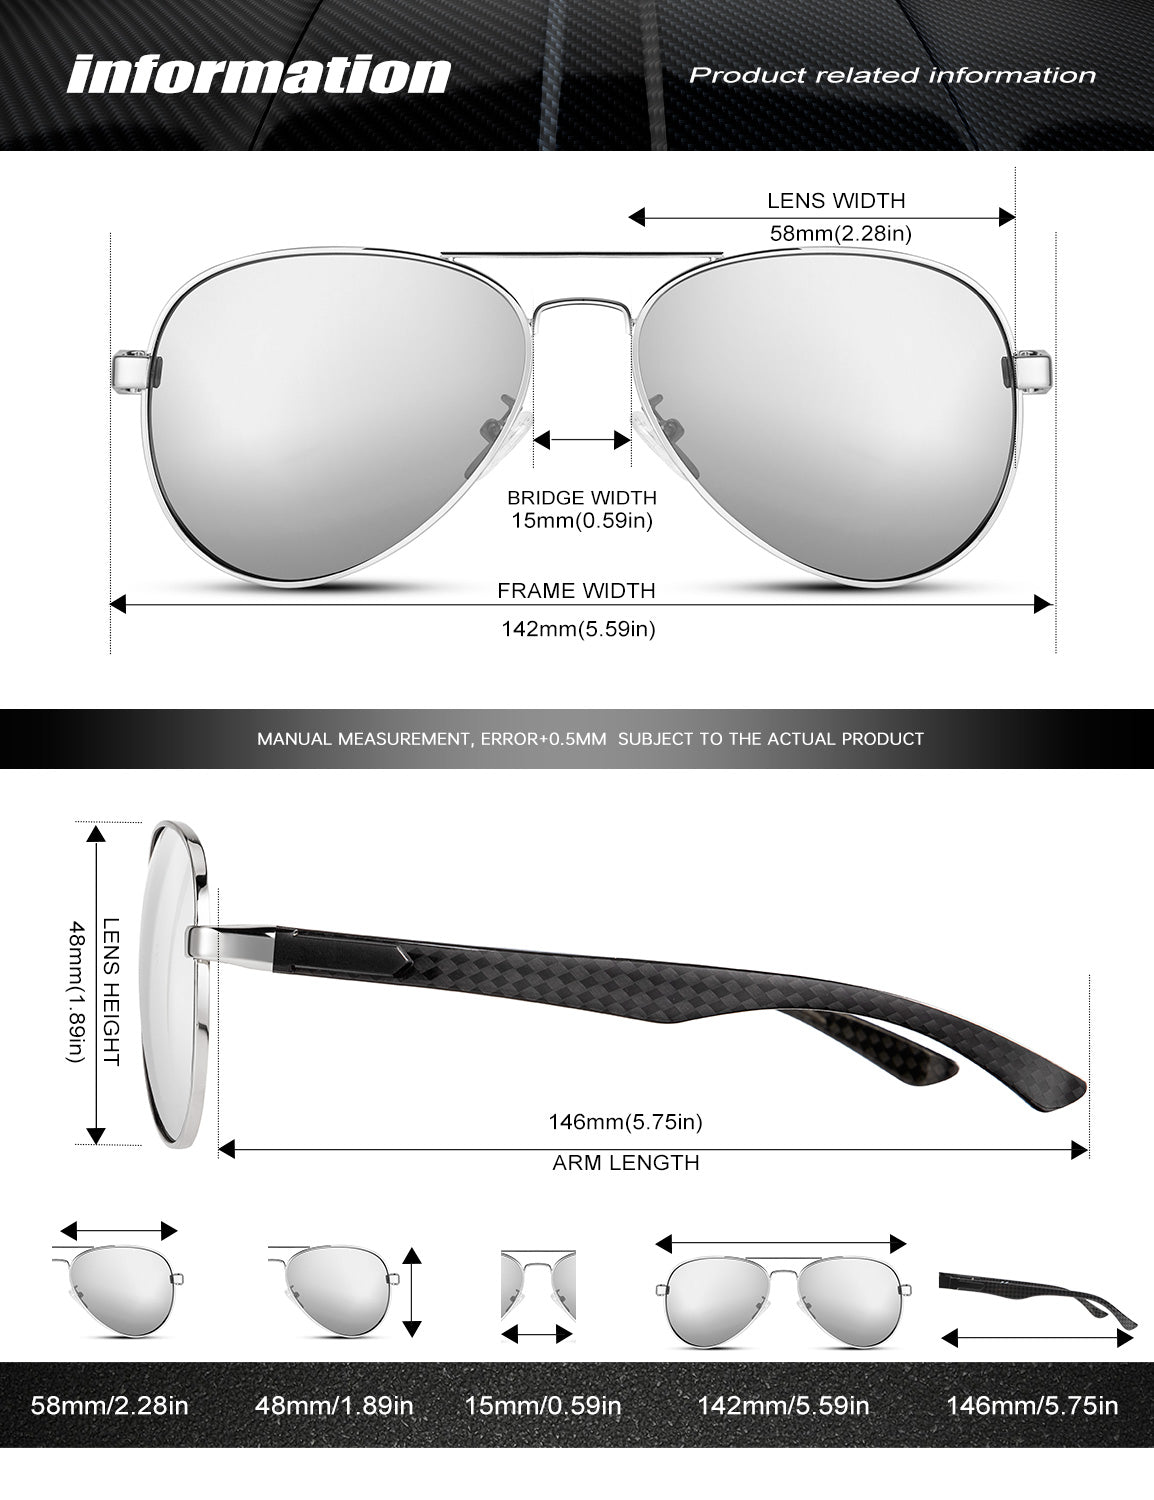 Carbon Fiber Temple Polarized Pilot Sunglasses S55-3